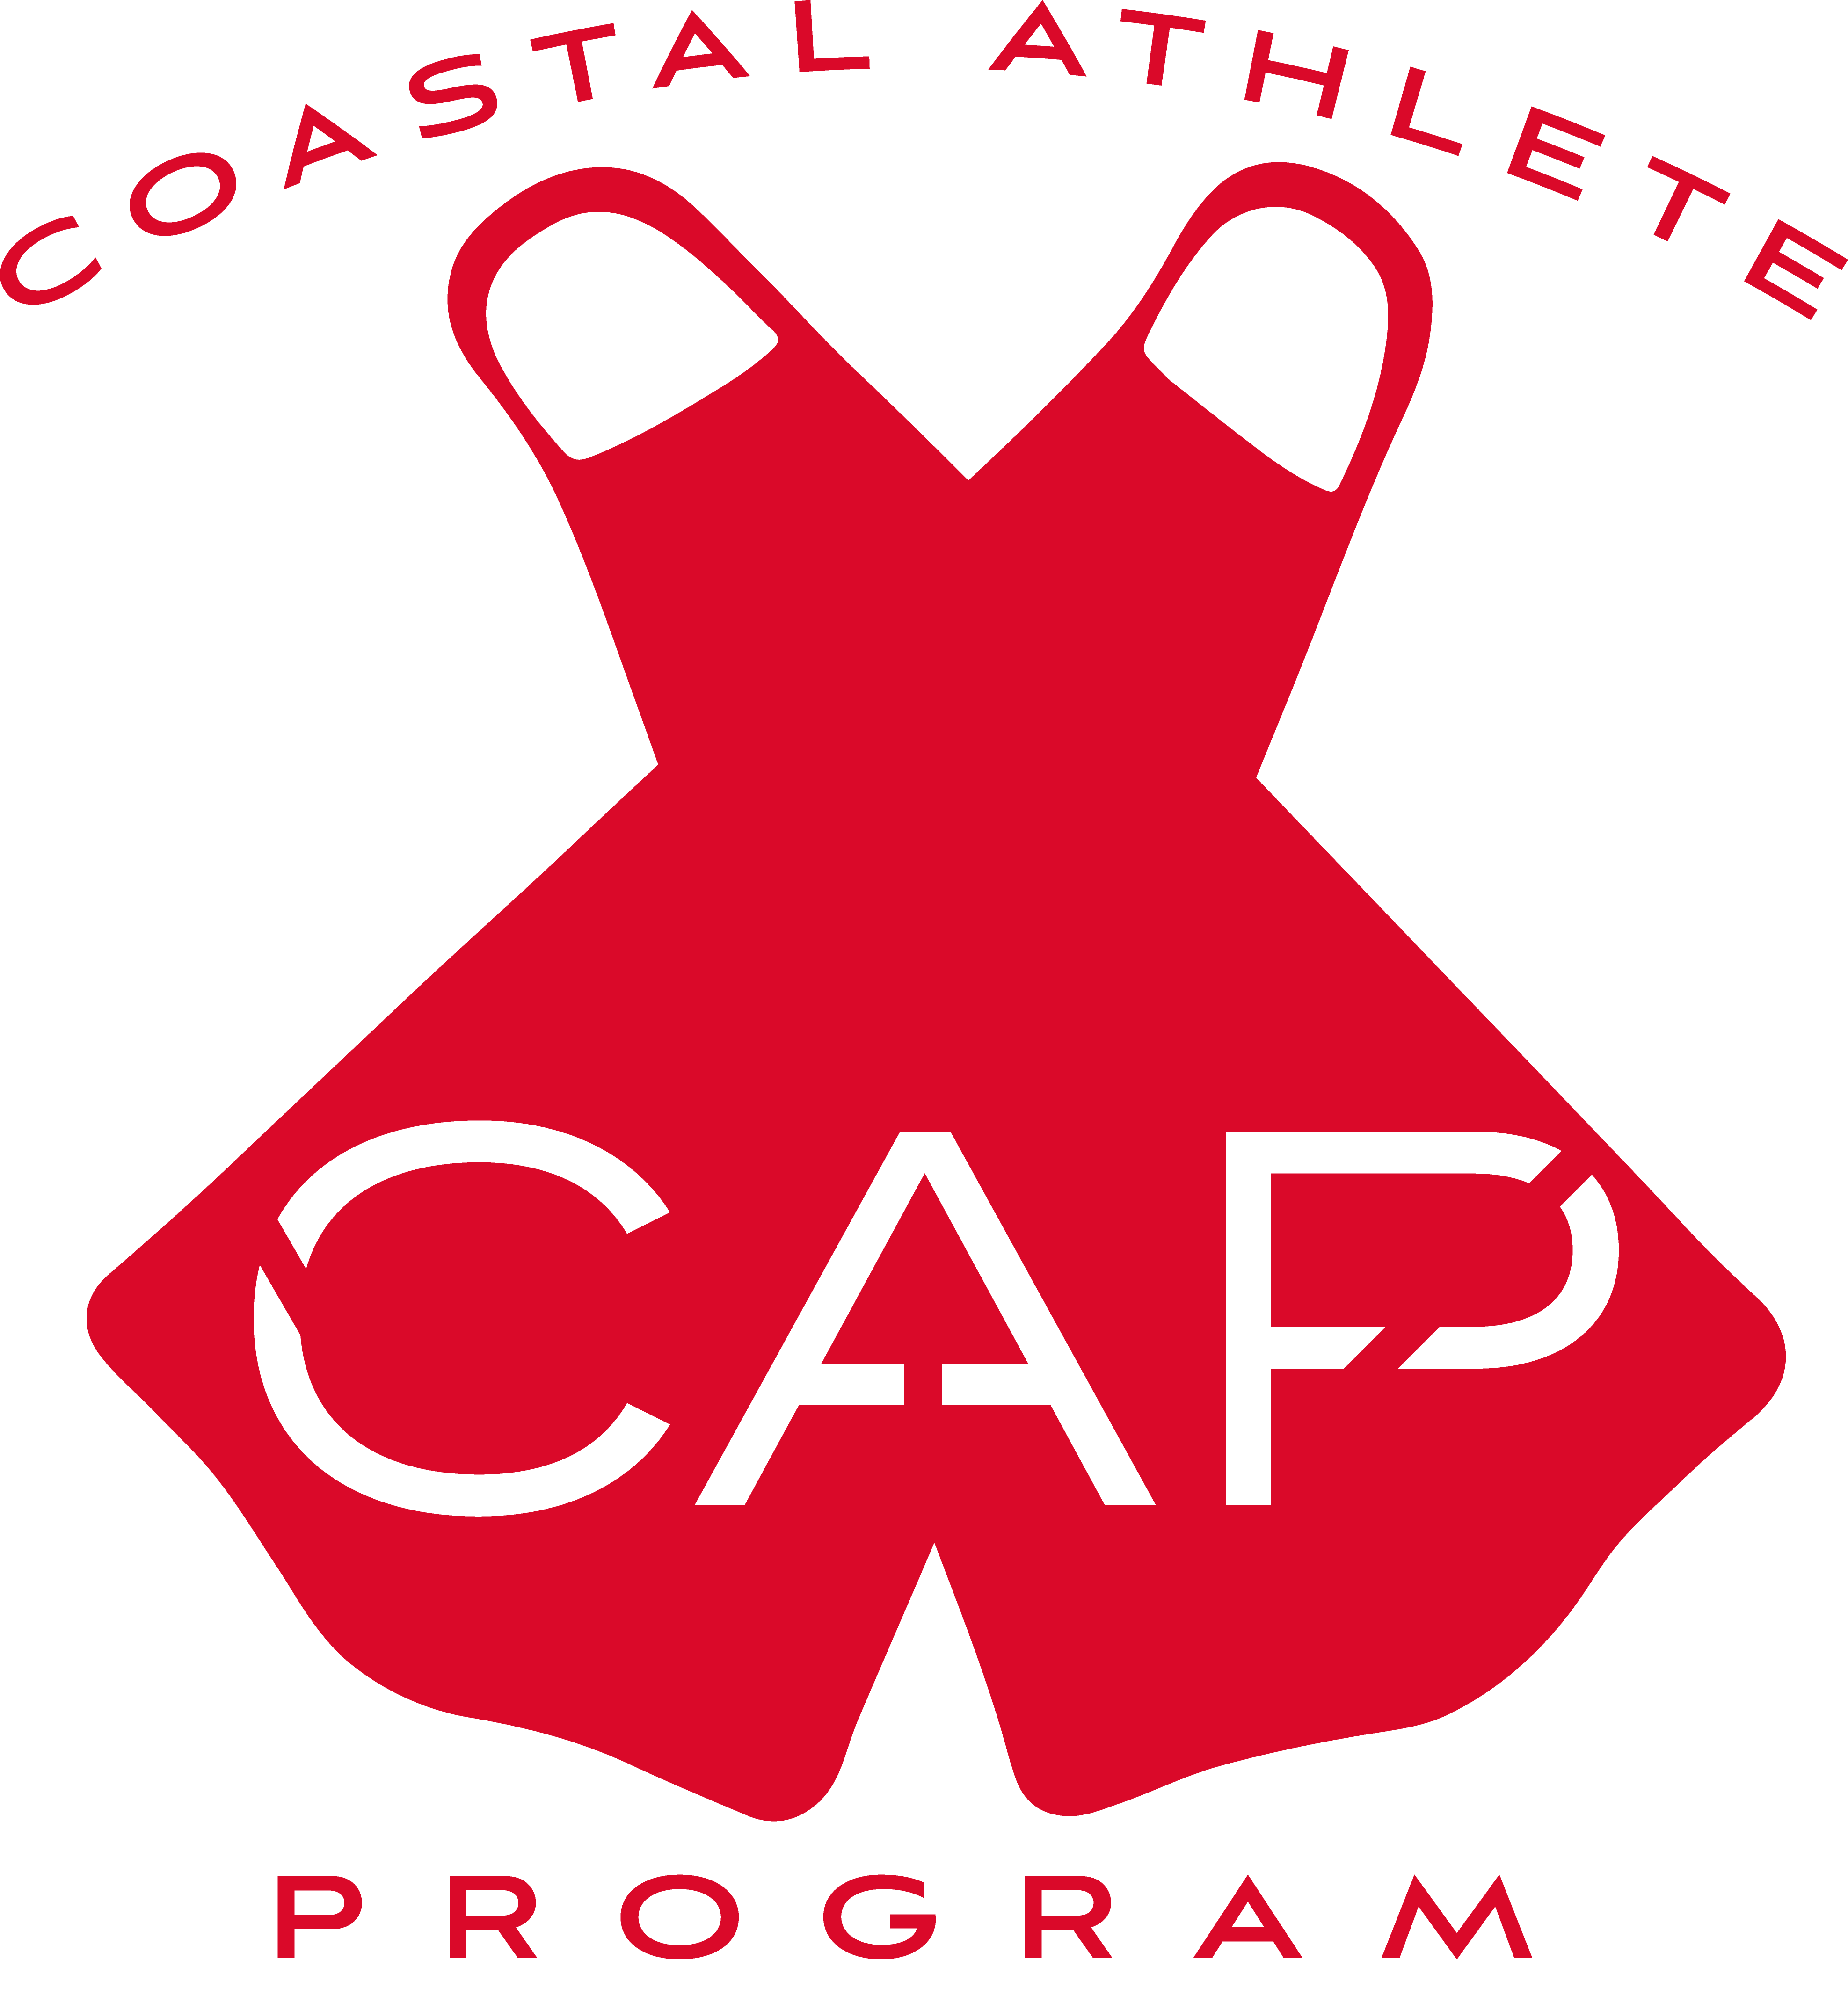 The Coastal Athlete Program